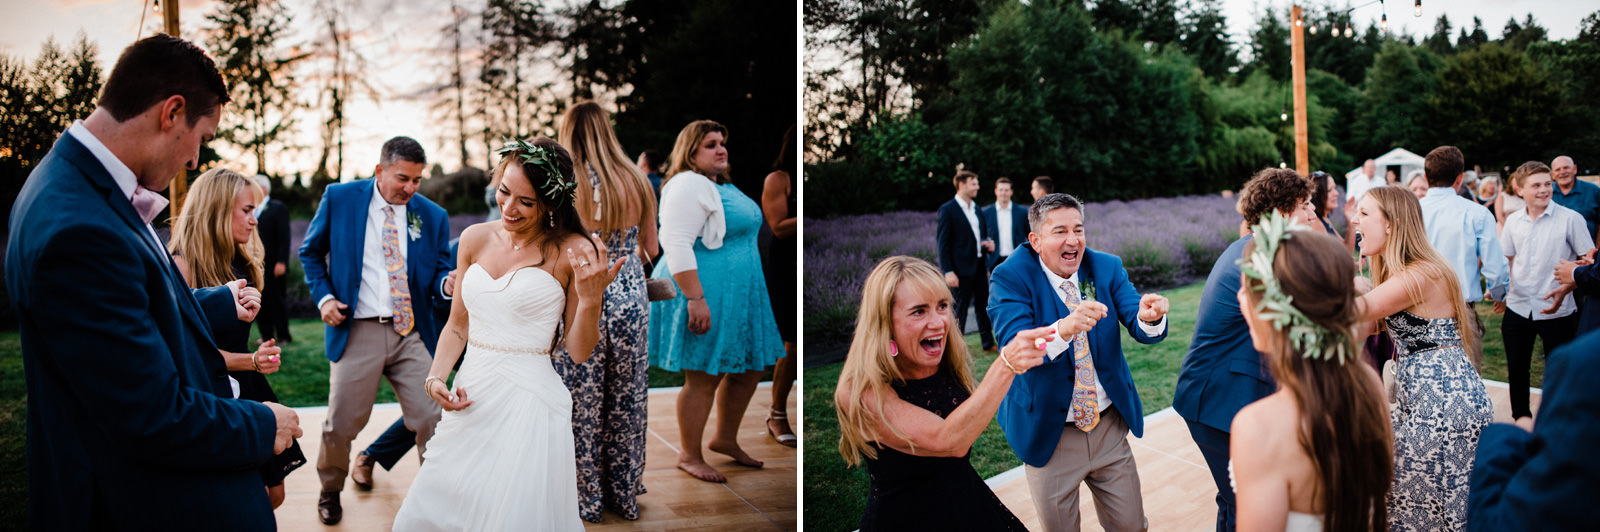 108-woodinville-lavendar-farm-wedding-with-golden-glowy-photos.jpg